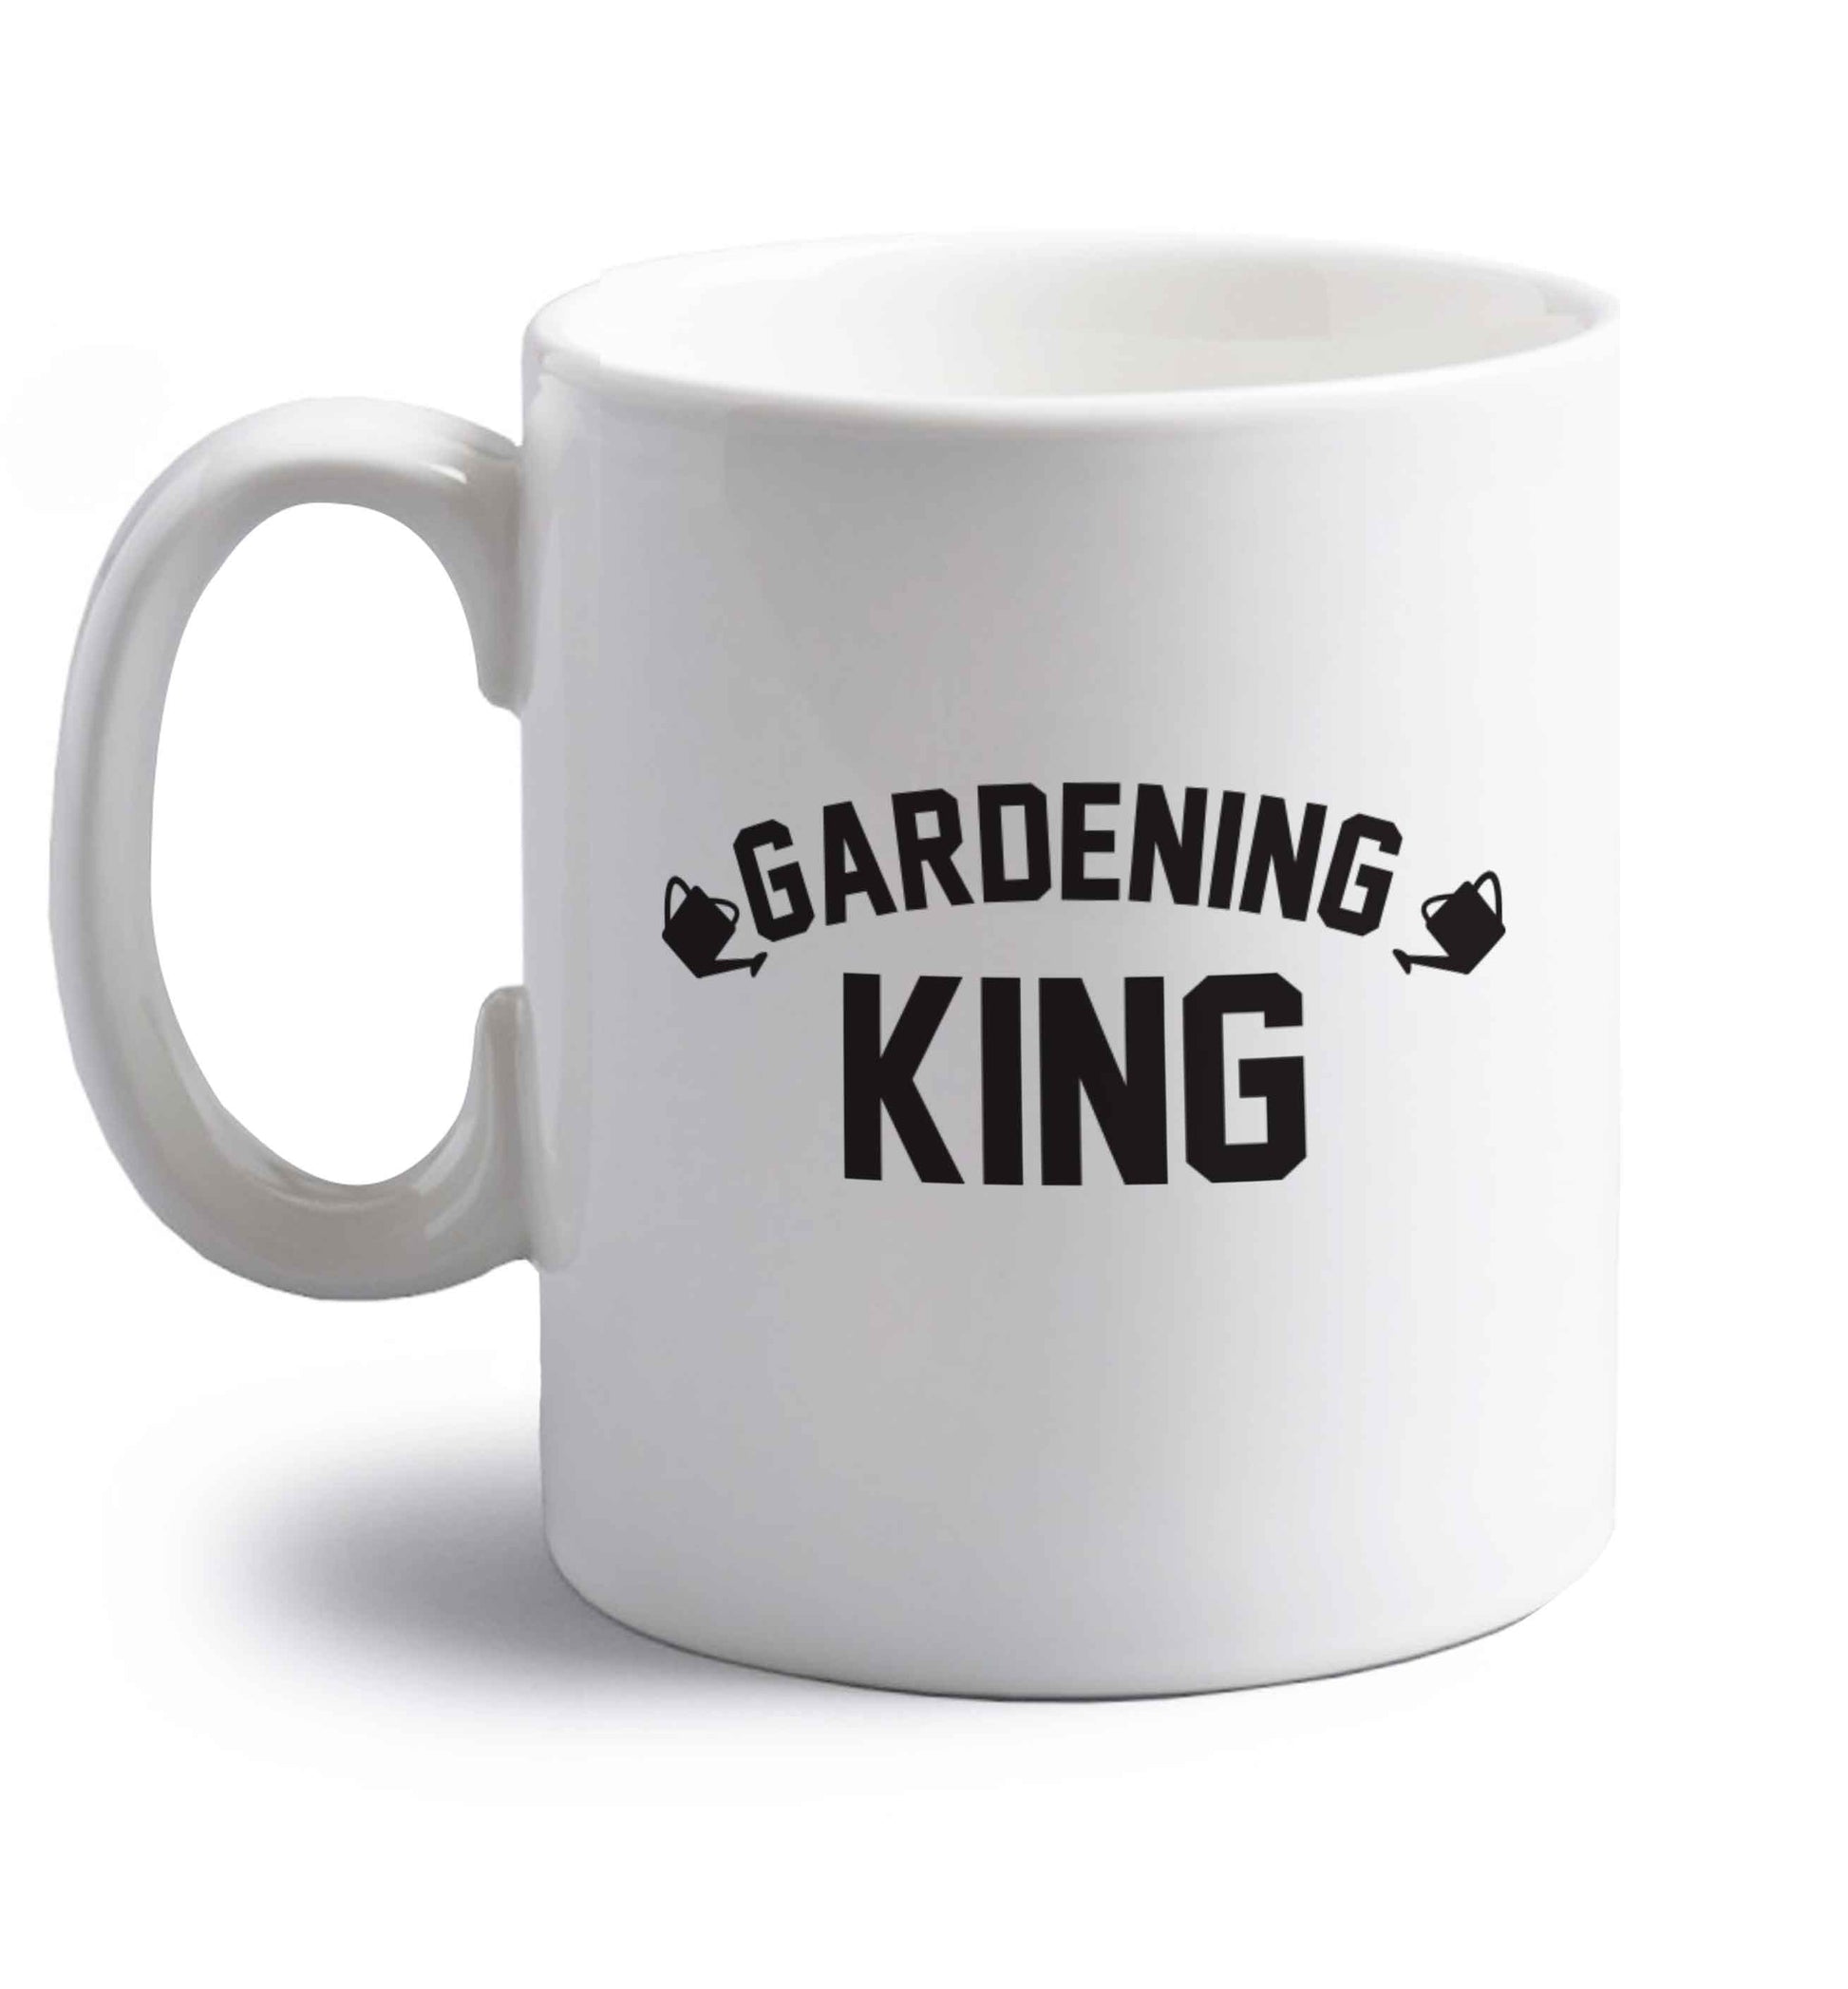 Gardening king right handed white ceramic mug 